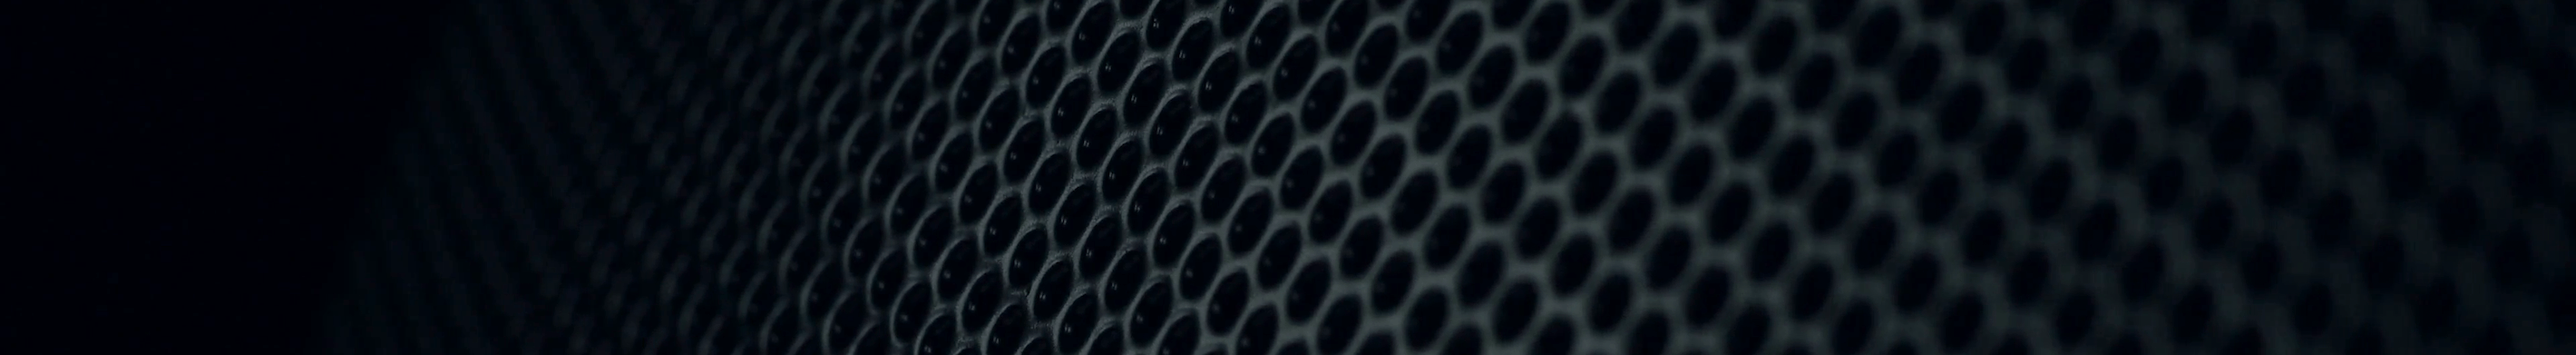 Metal Speaker cover Close Up